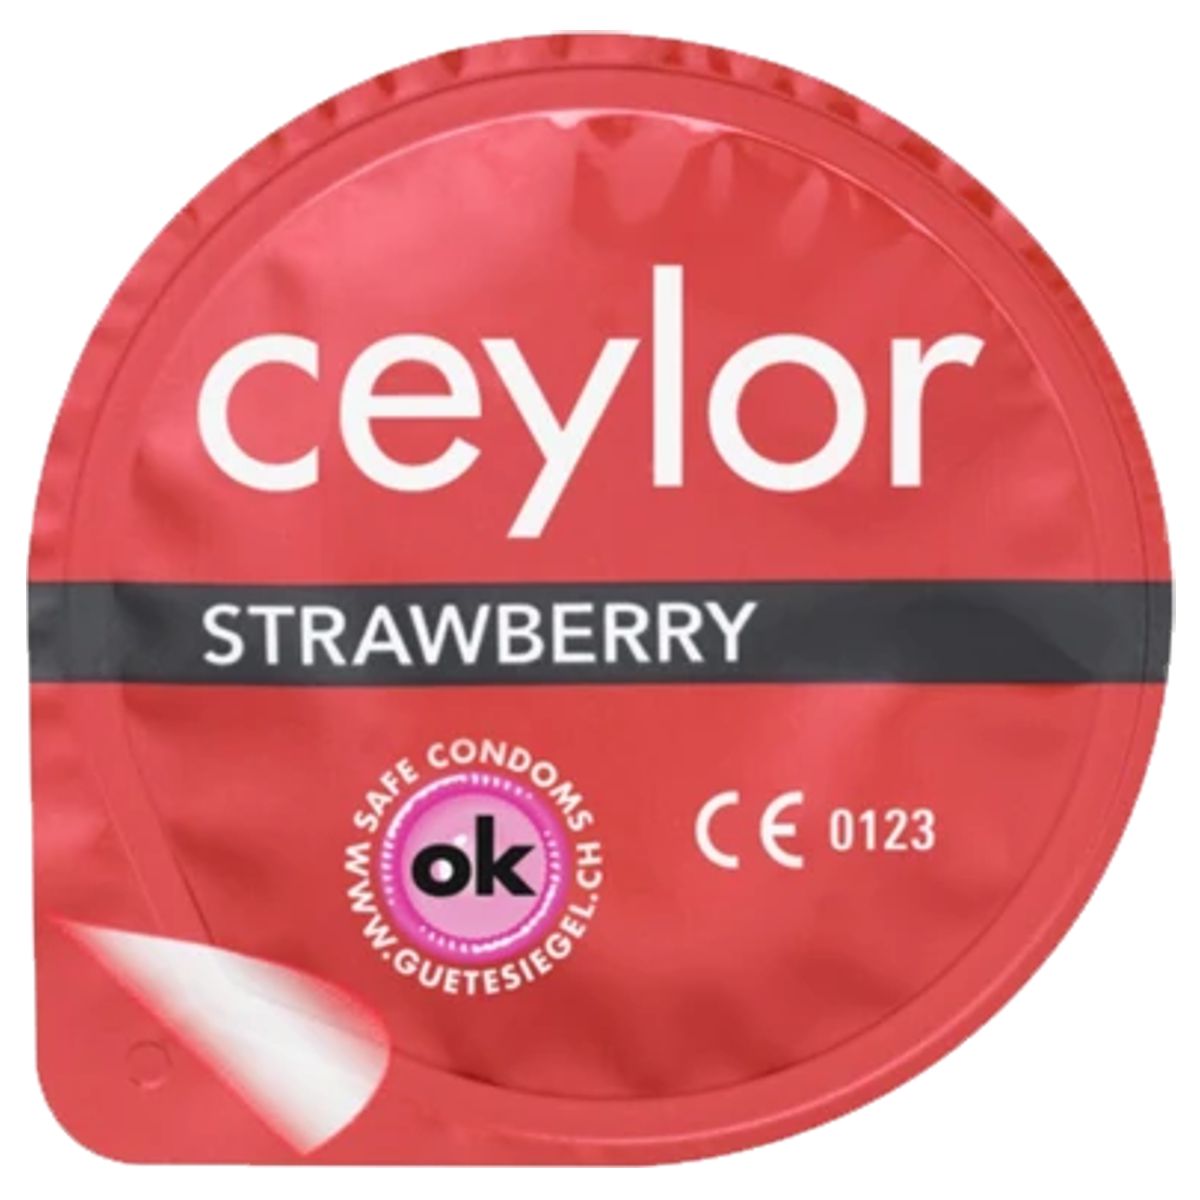 Ceylor Strawberry Präservativ 6 Stück